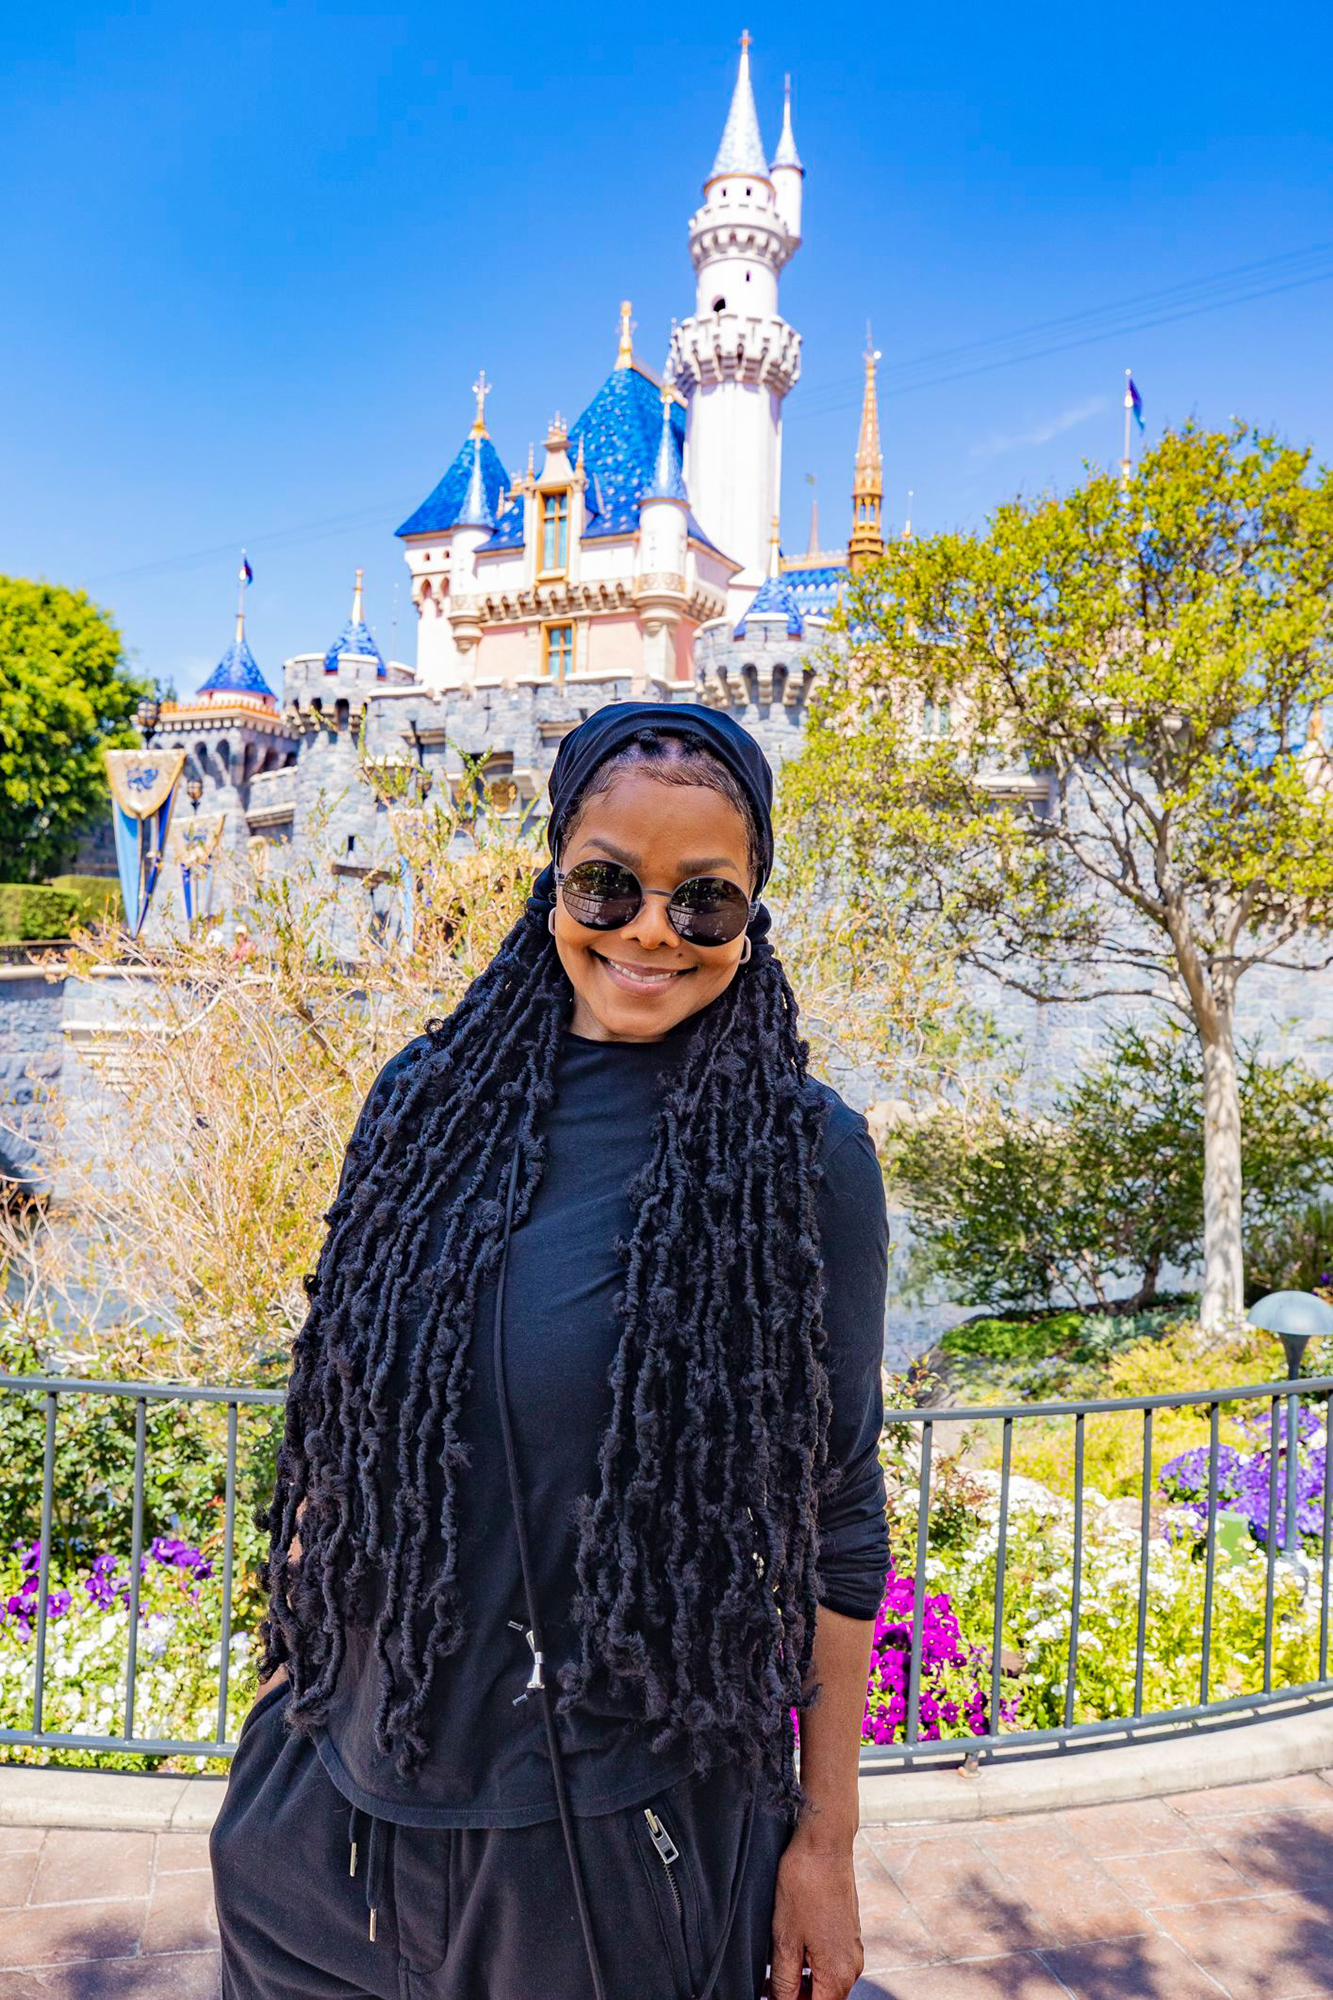 Janet Jackson Vacations at Disneyland Resort, Anaheim, California, USA - 30 Mar 2022